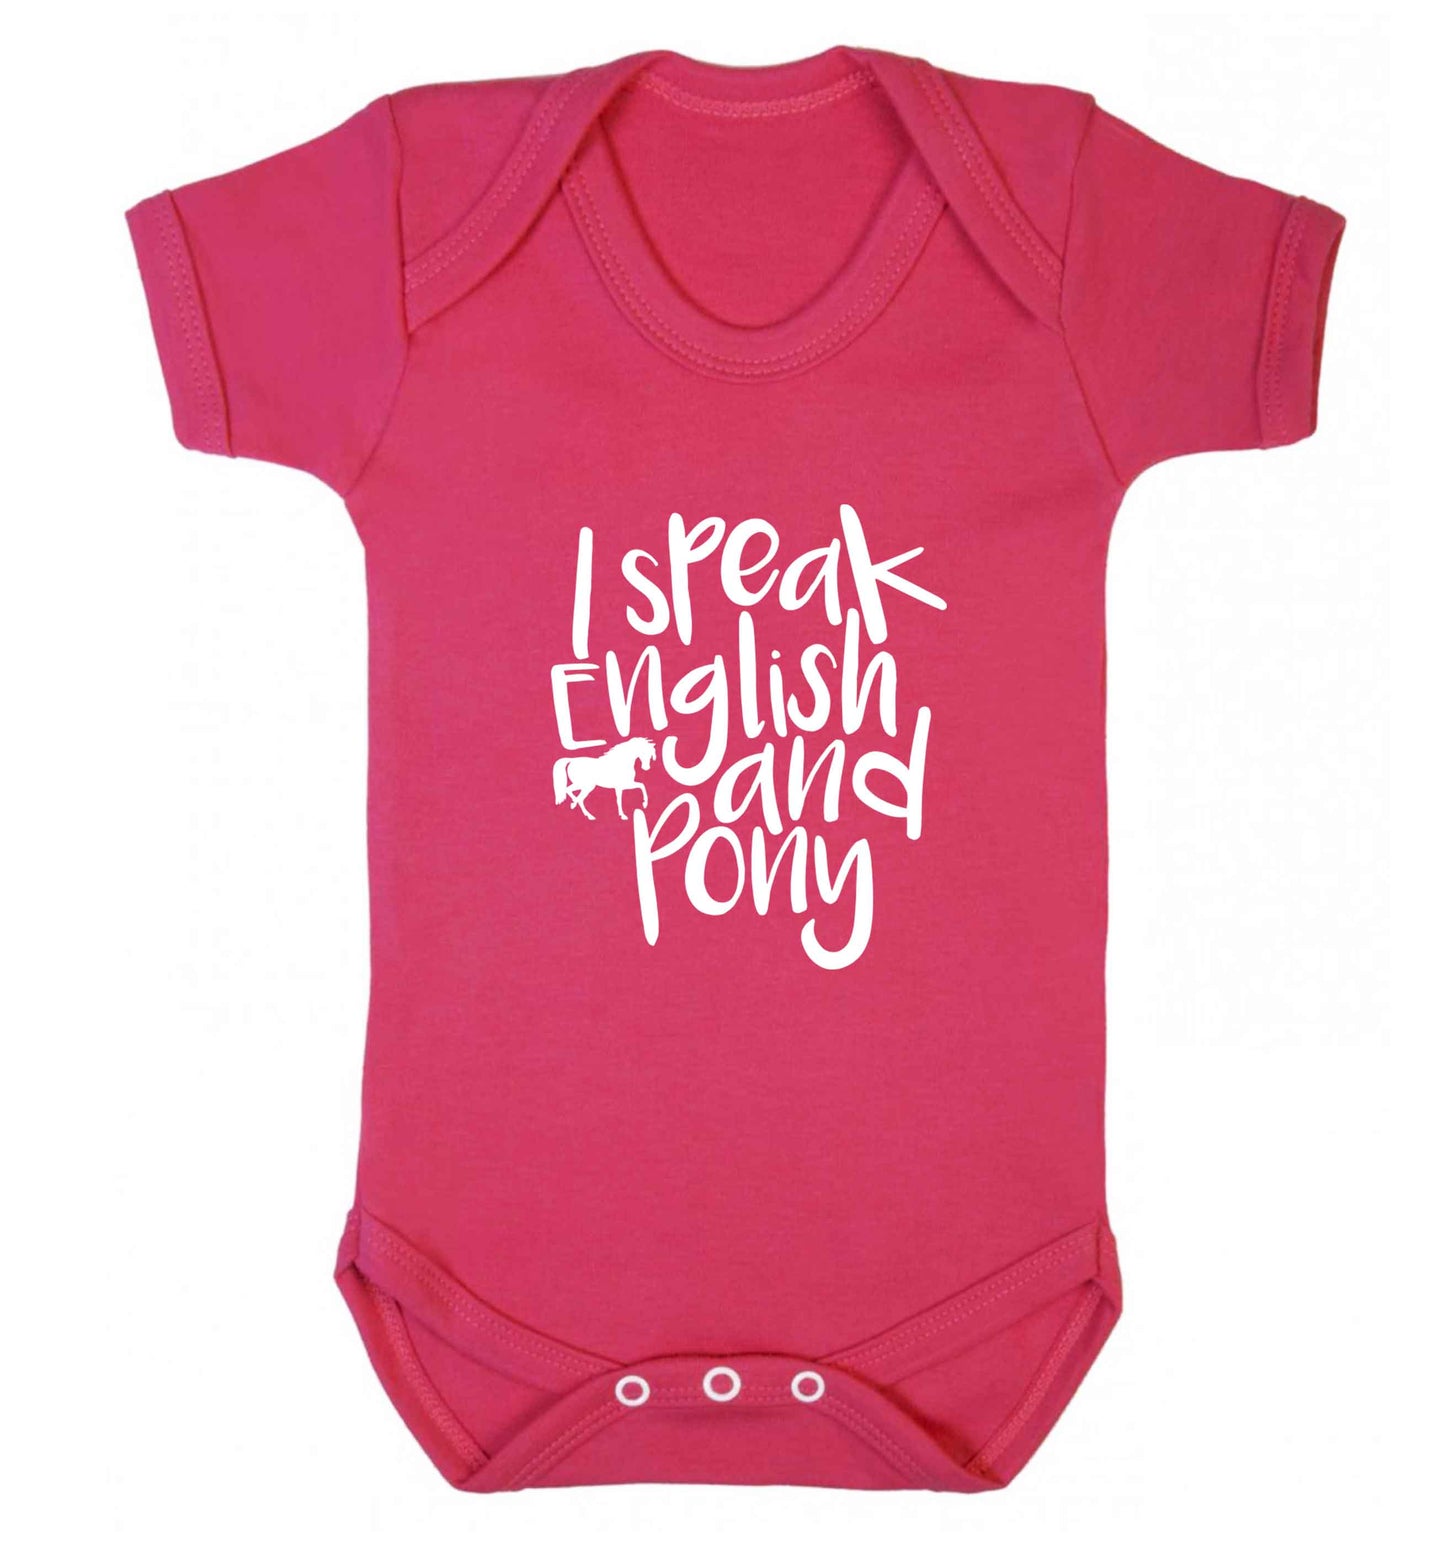 I speak English and pony baby vest dark pink 18-24 months